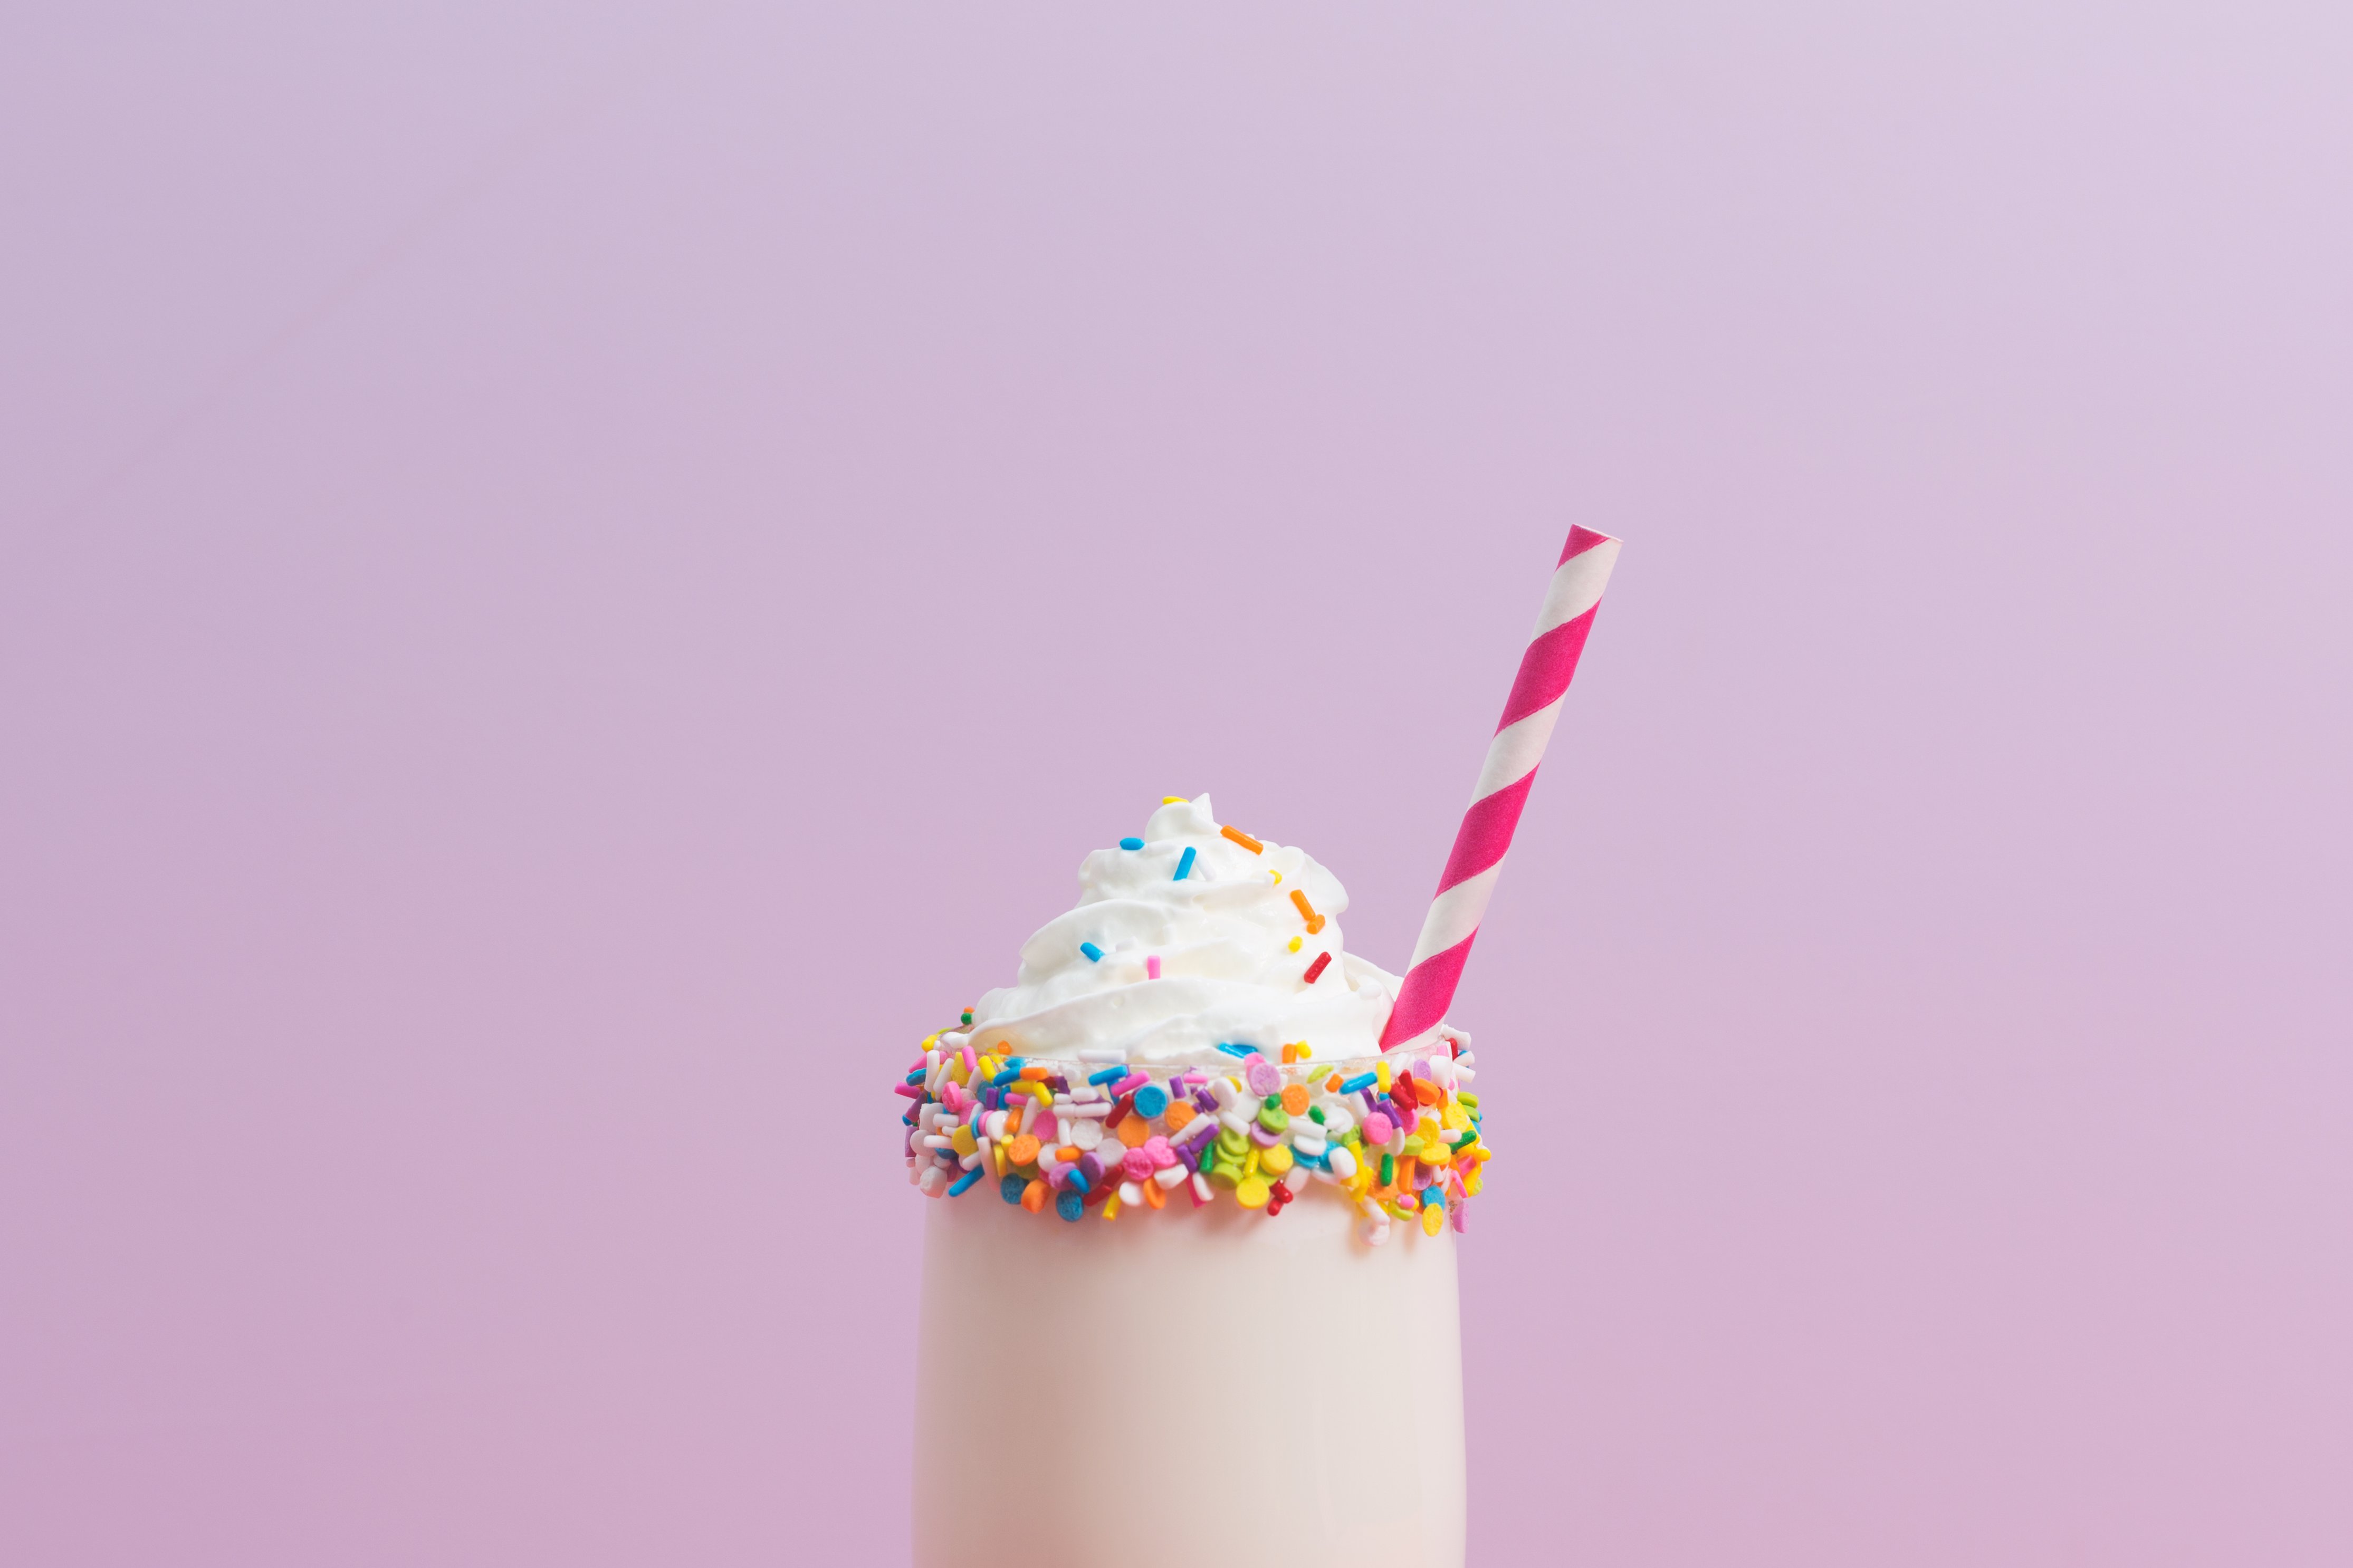 Milkshake On Pink by Sarah Pflug